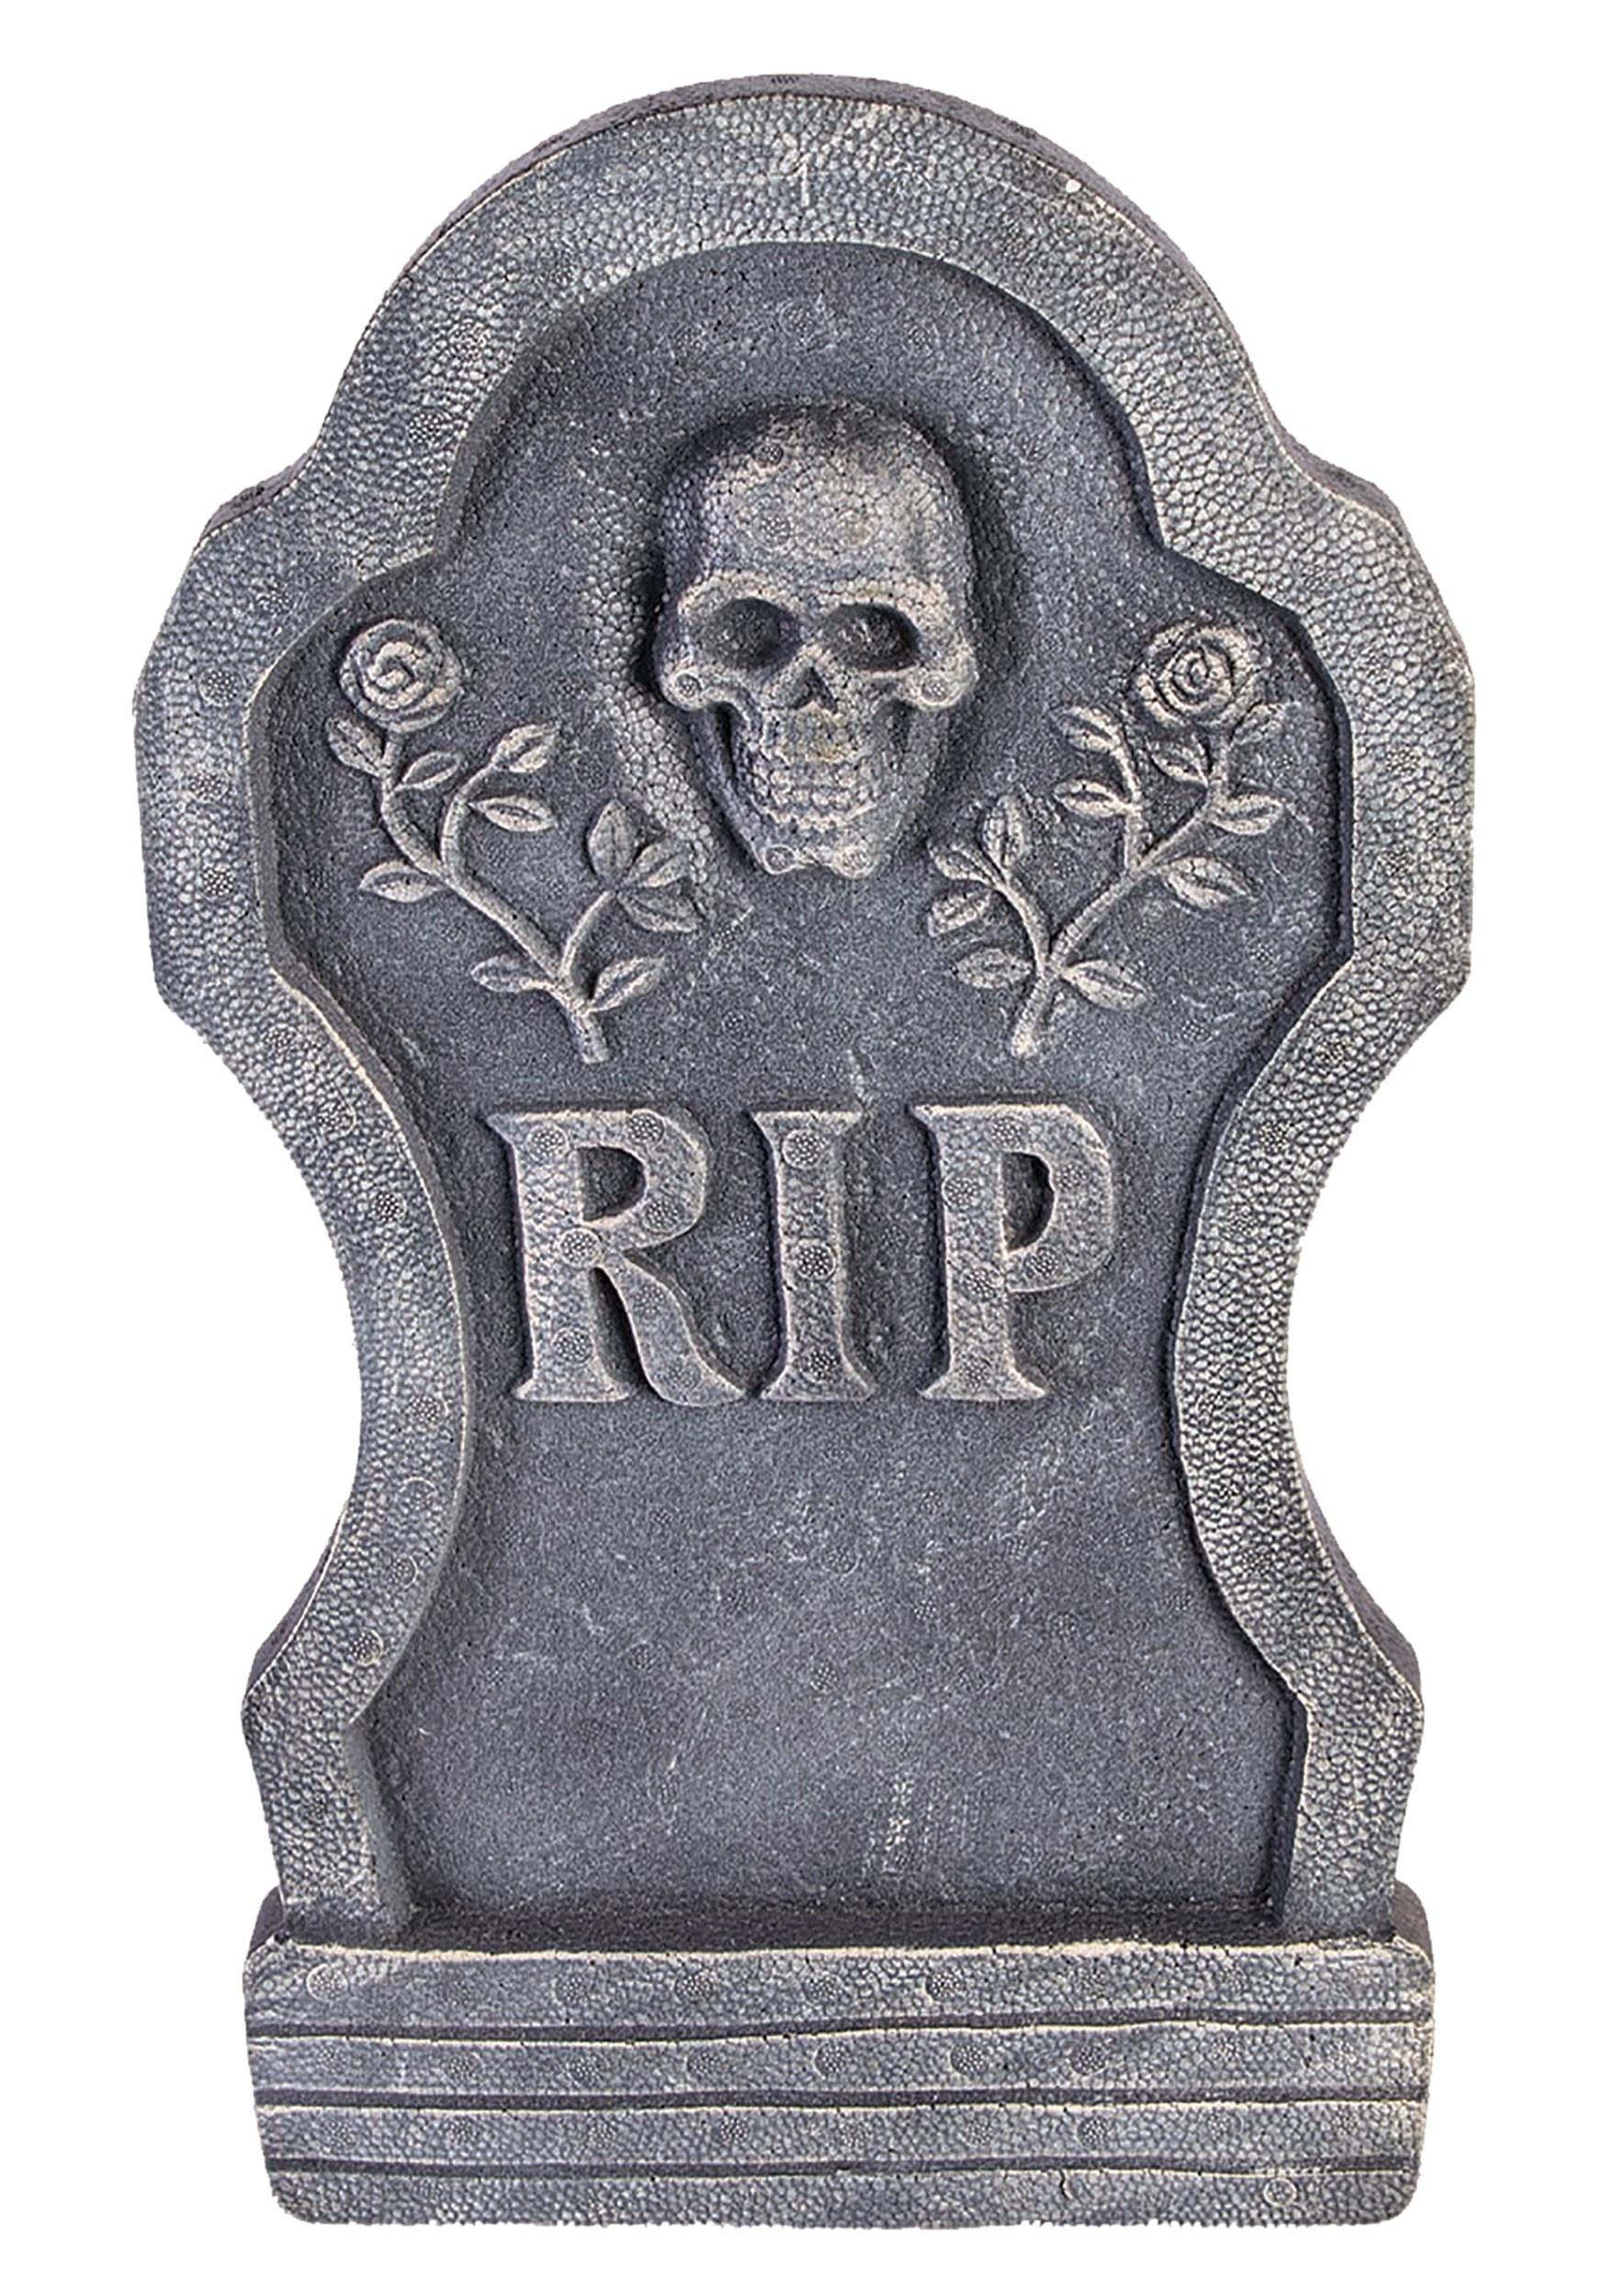 rip headstone